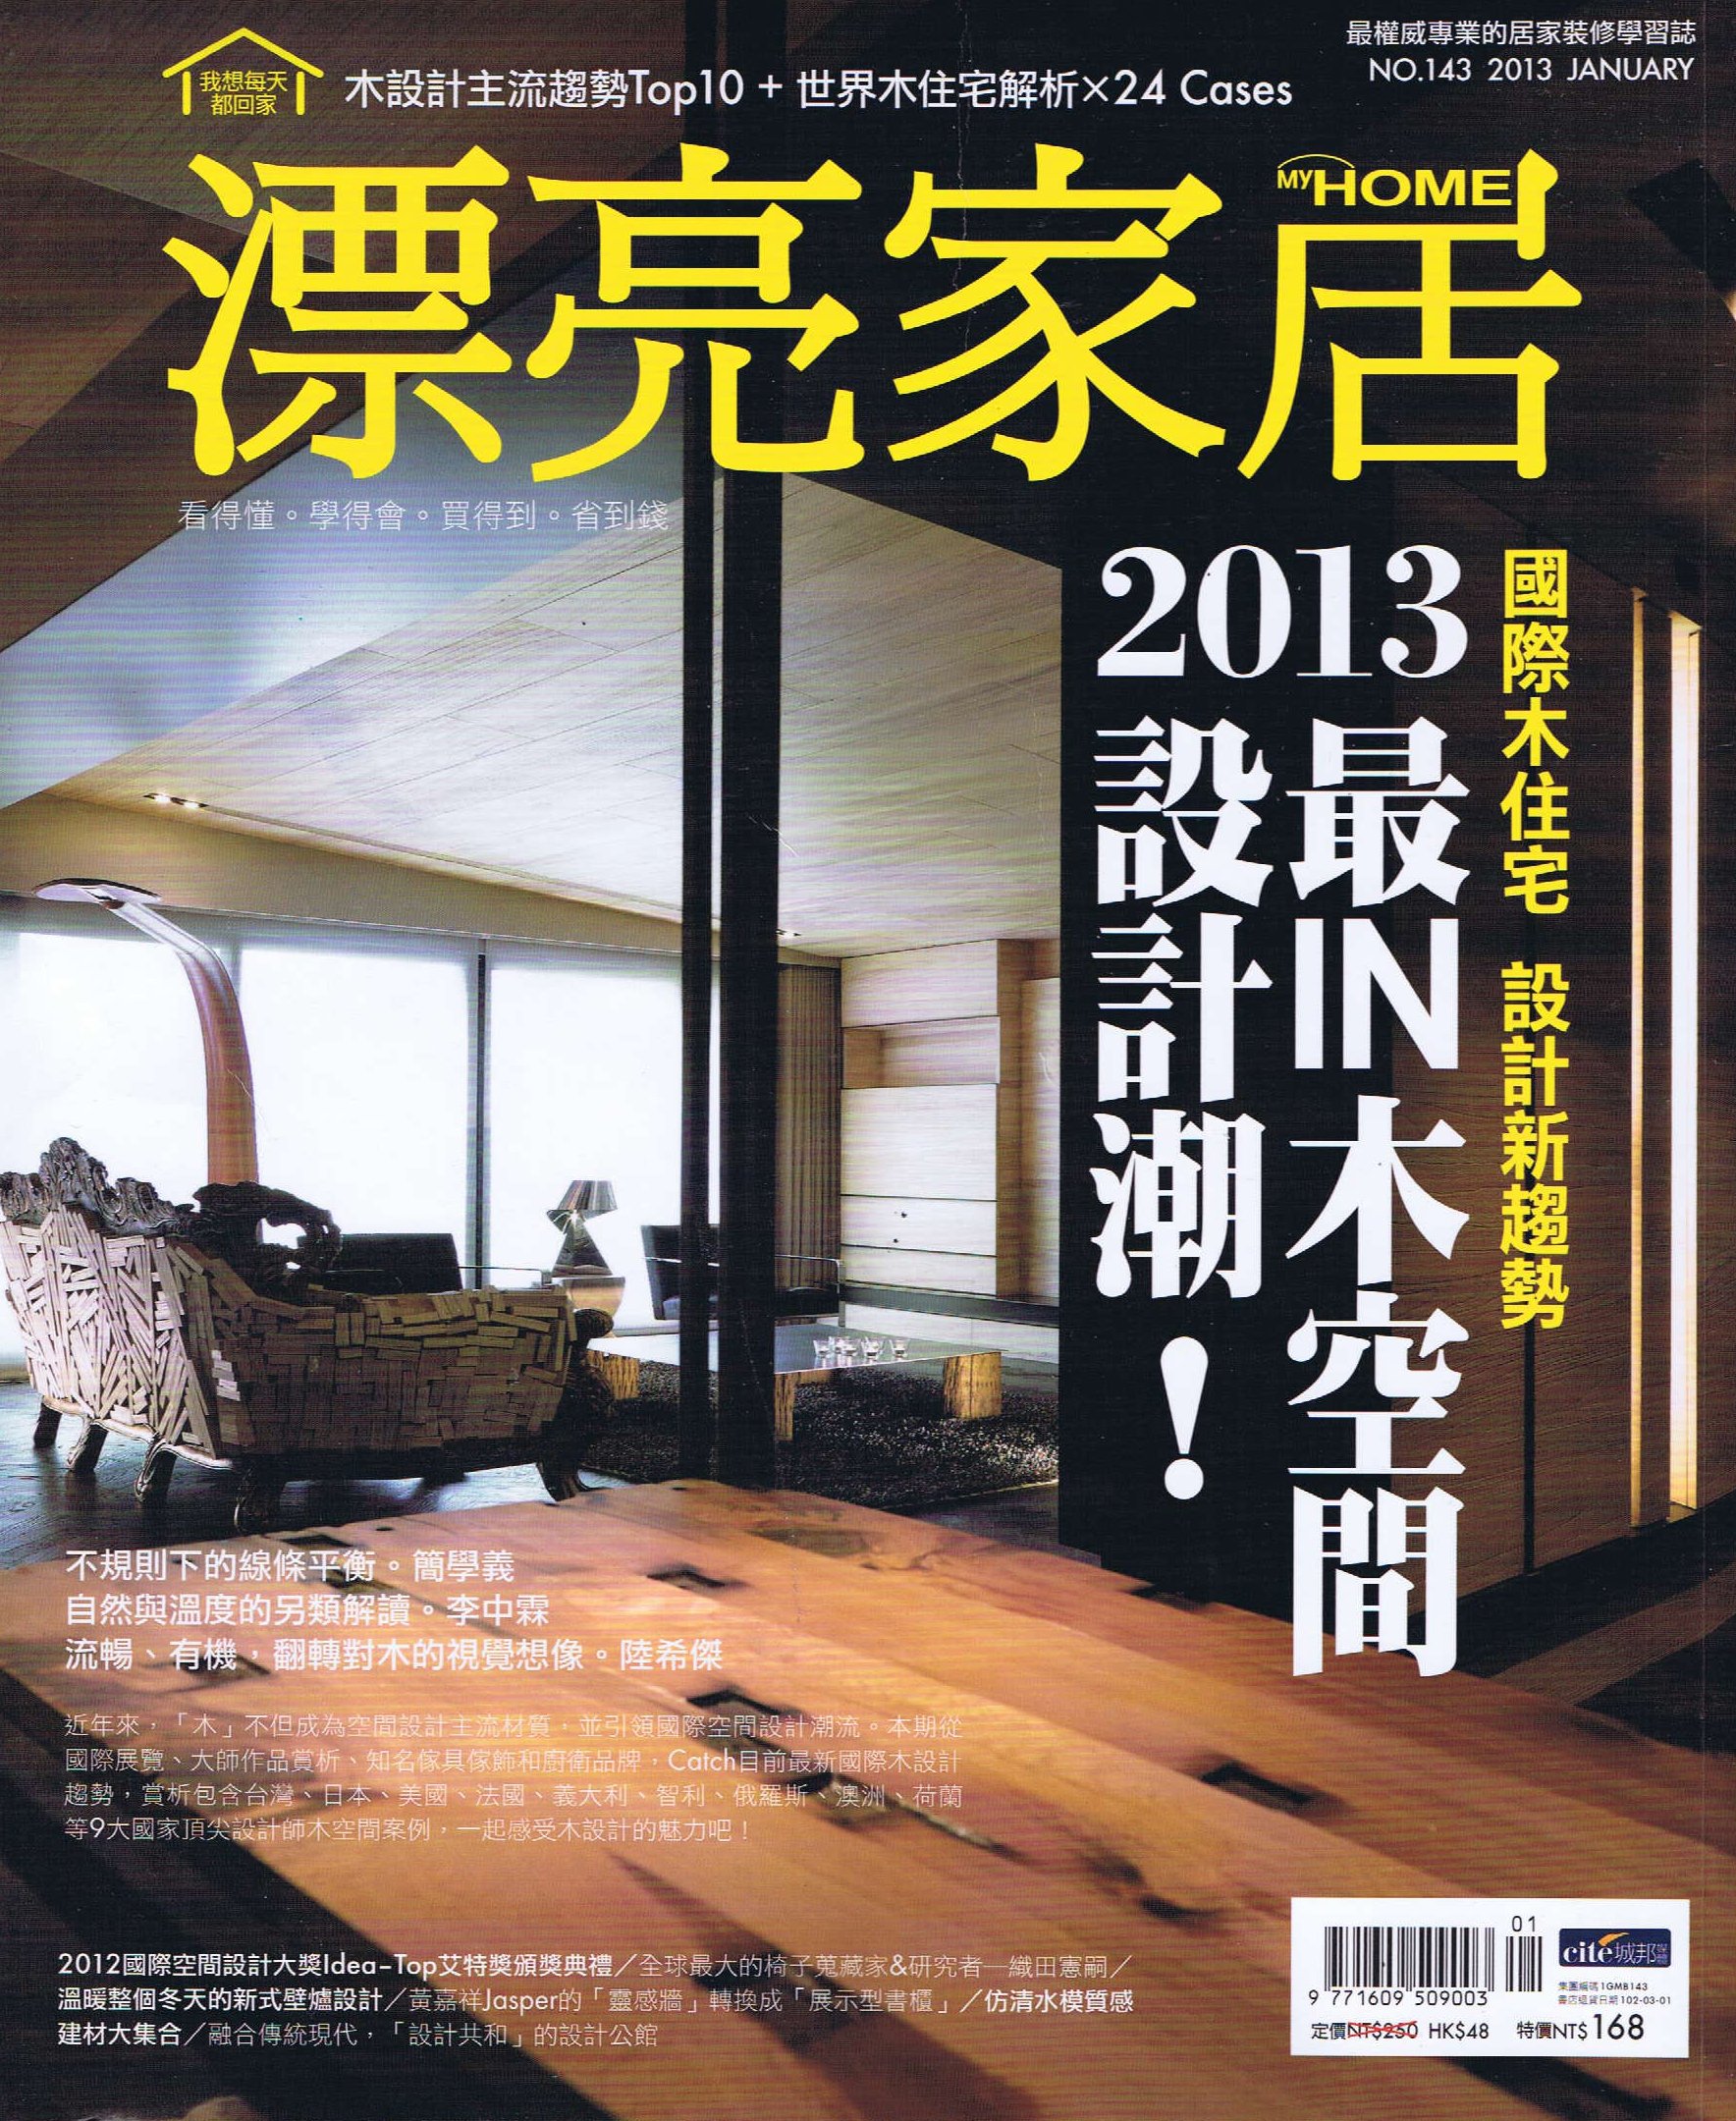 2013 Jan - My Home Publishing Cover.JPG